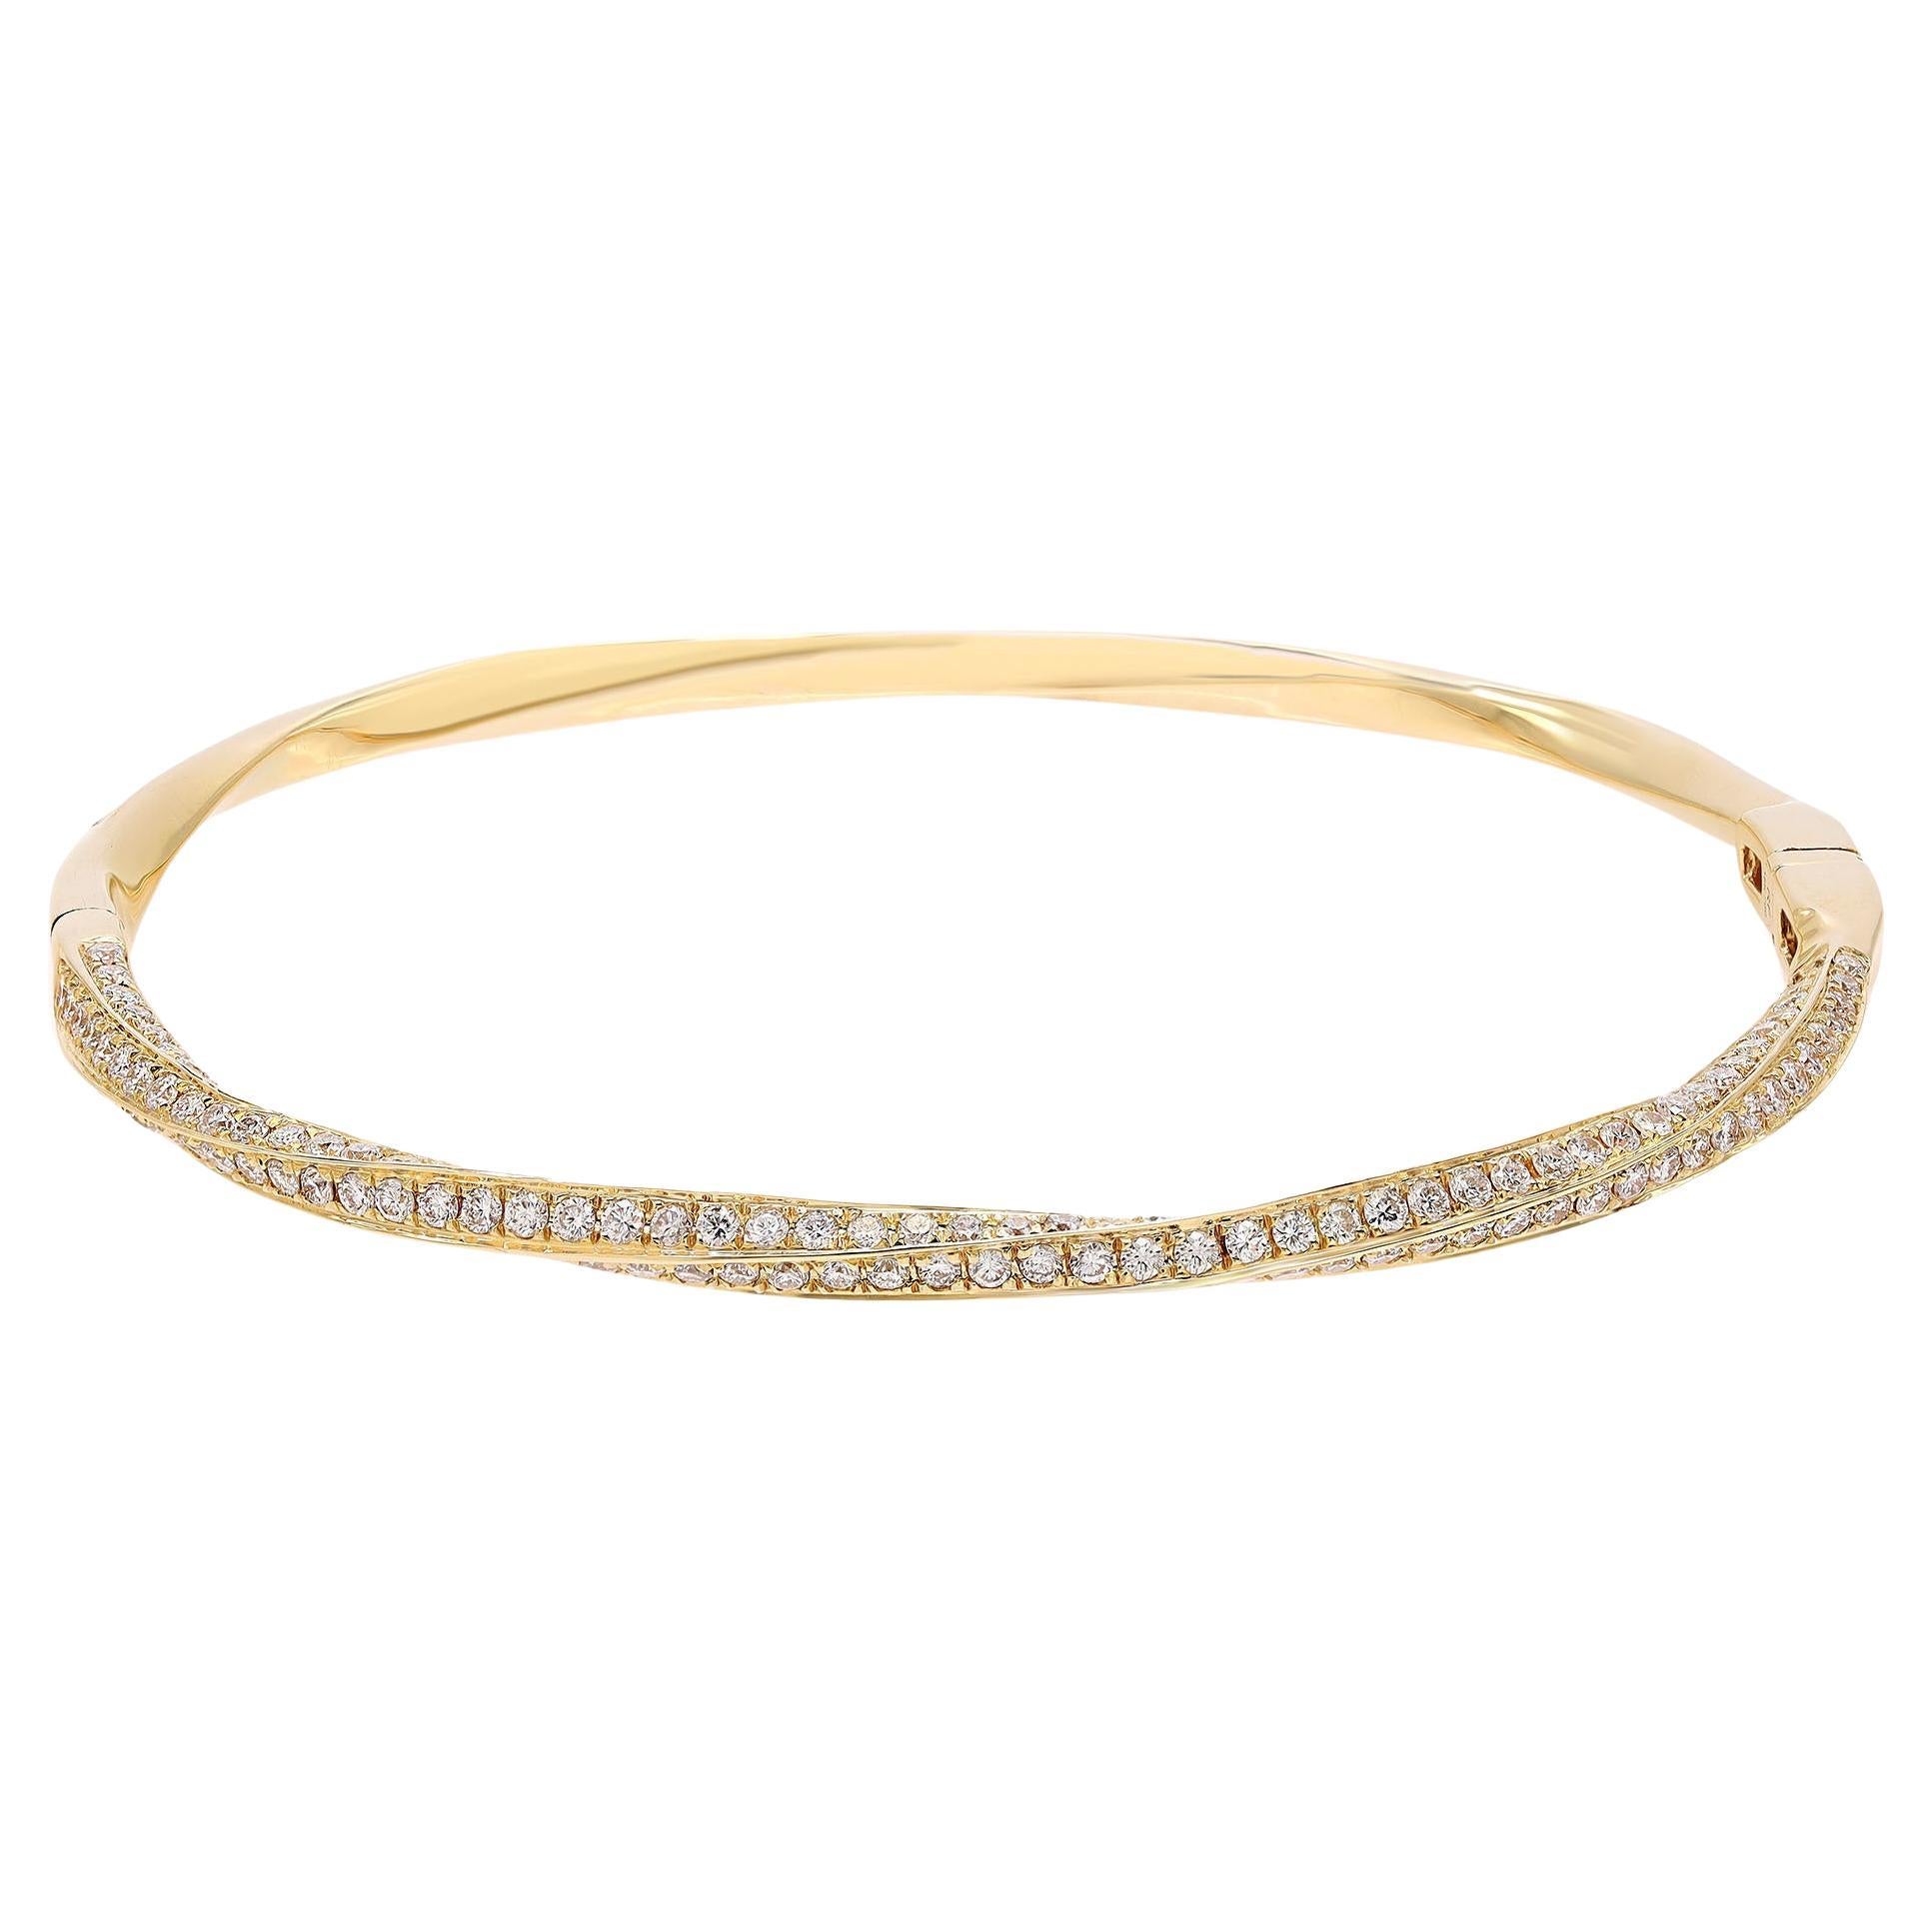 Rachel Koen Pave Set Round Cut Diamond Bangle Bracelet 18k Yellow Gold 2.05Cttw For Sale